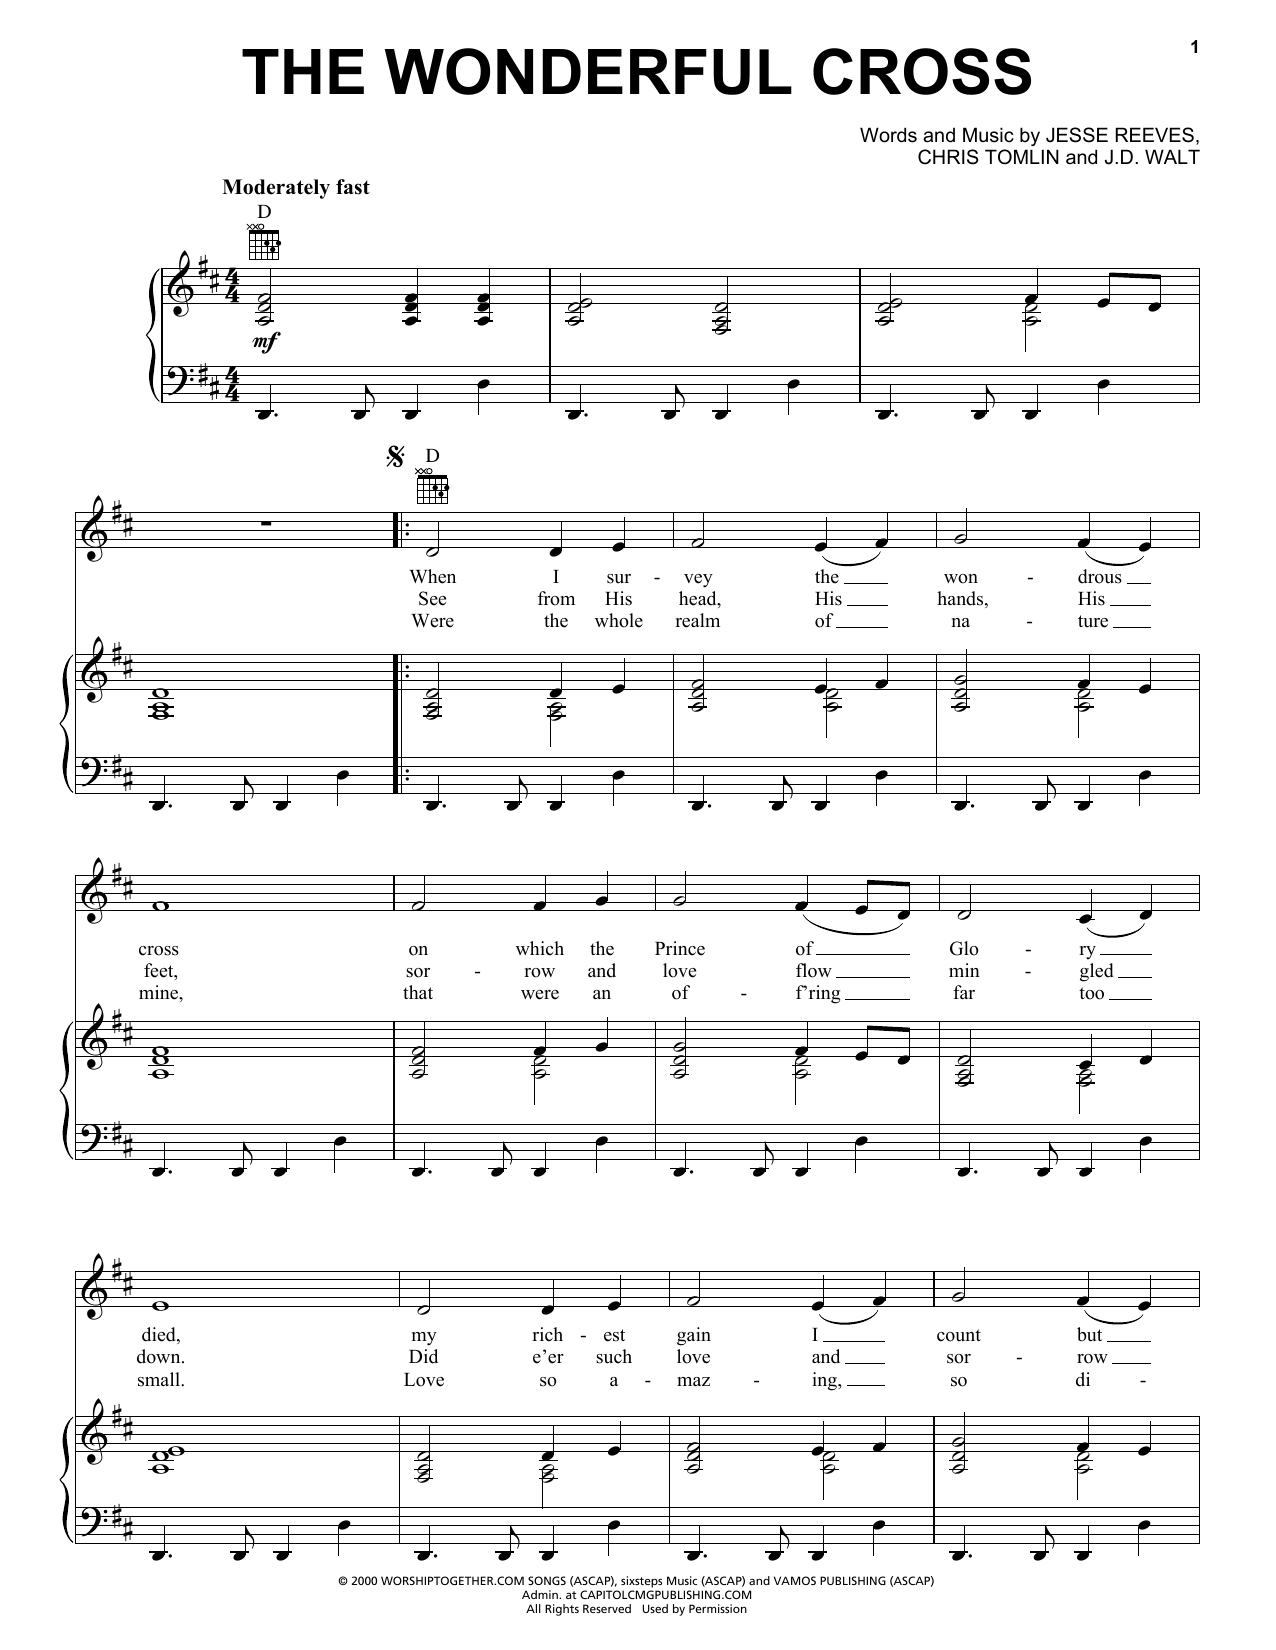 Chris Tomlin The Wonderful Cross Sheet Music Notes & Chords for Melody Line, Lyrics & Chords - Download or Print PDF